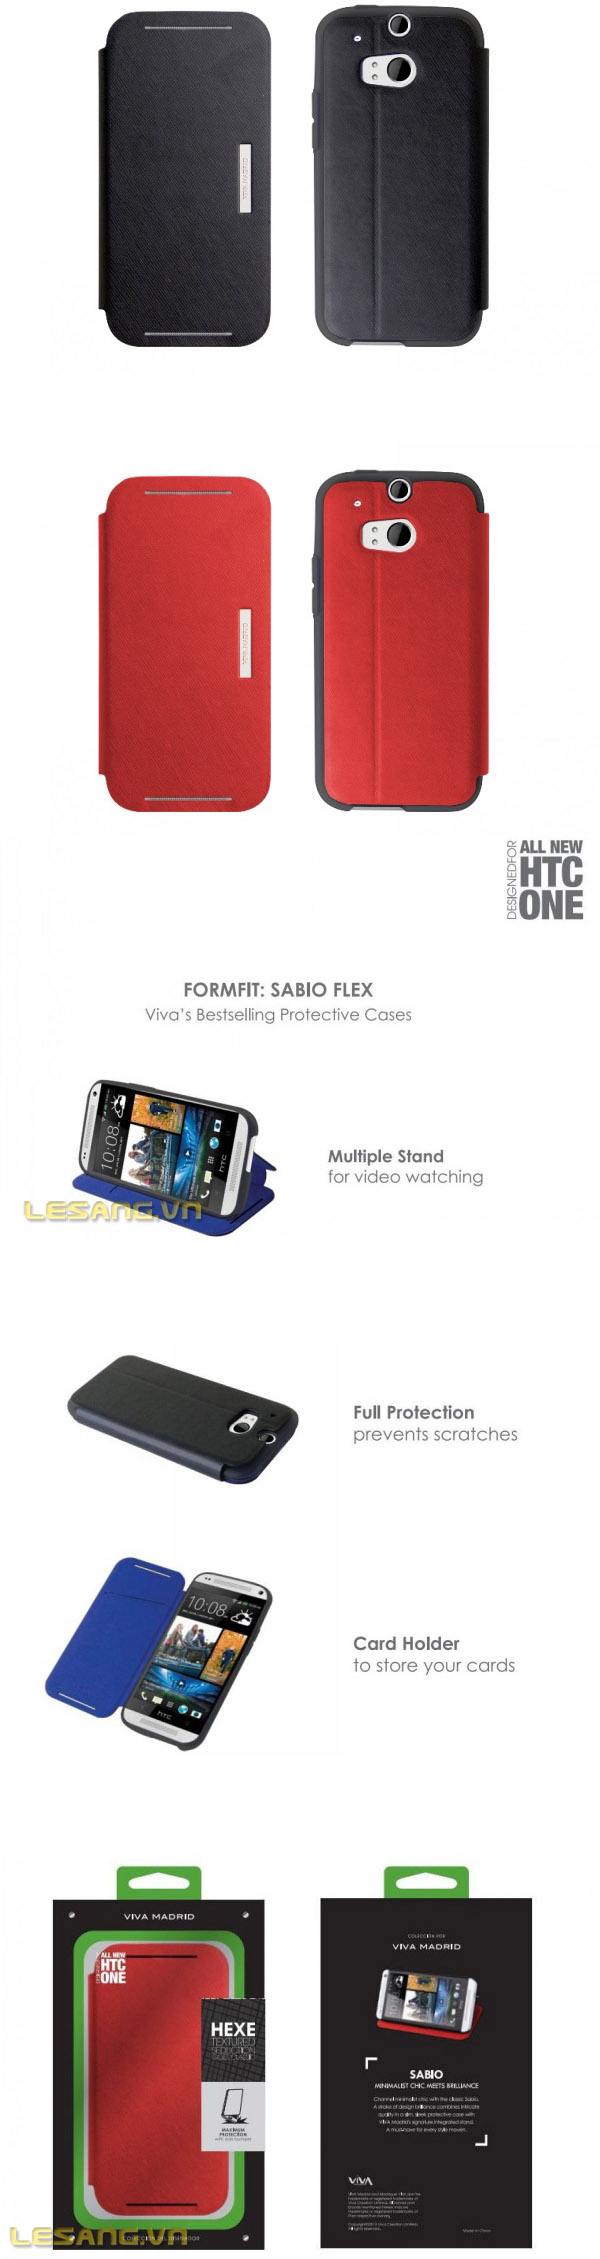 Bao da HTC One M8 Viva Hexe 3